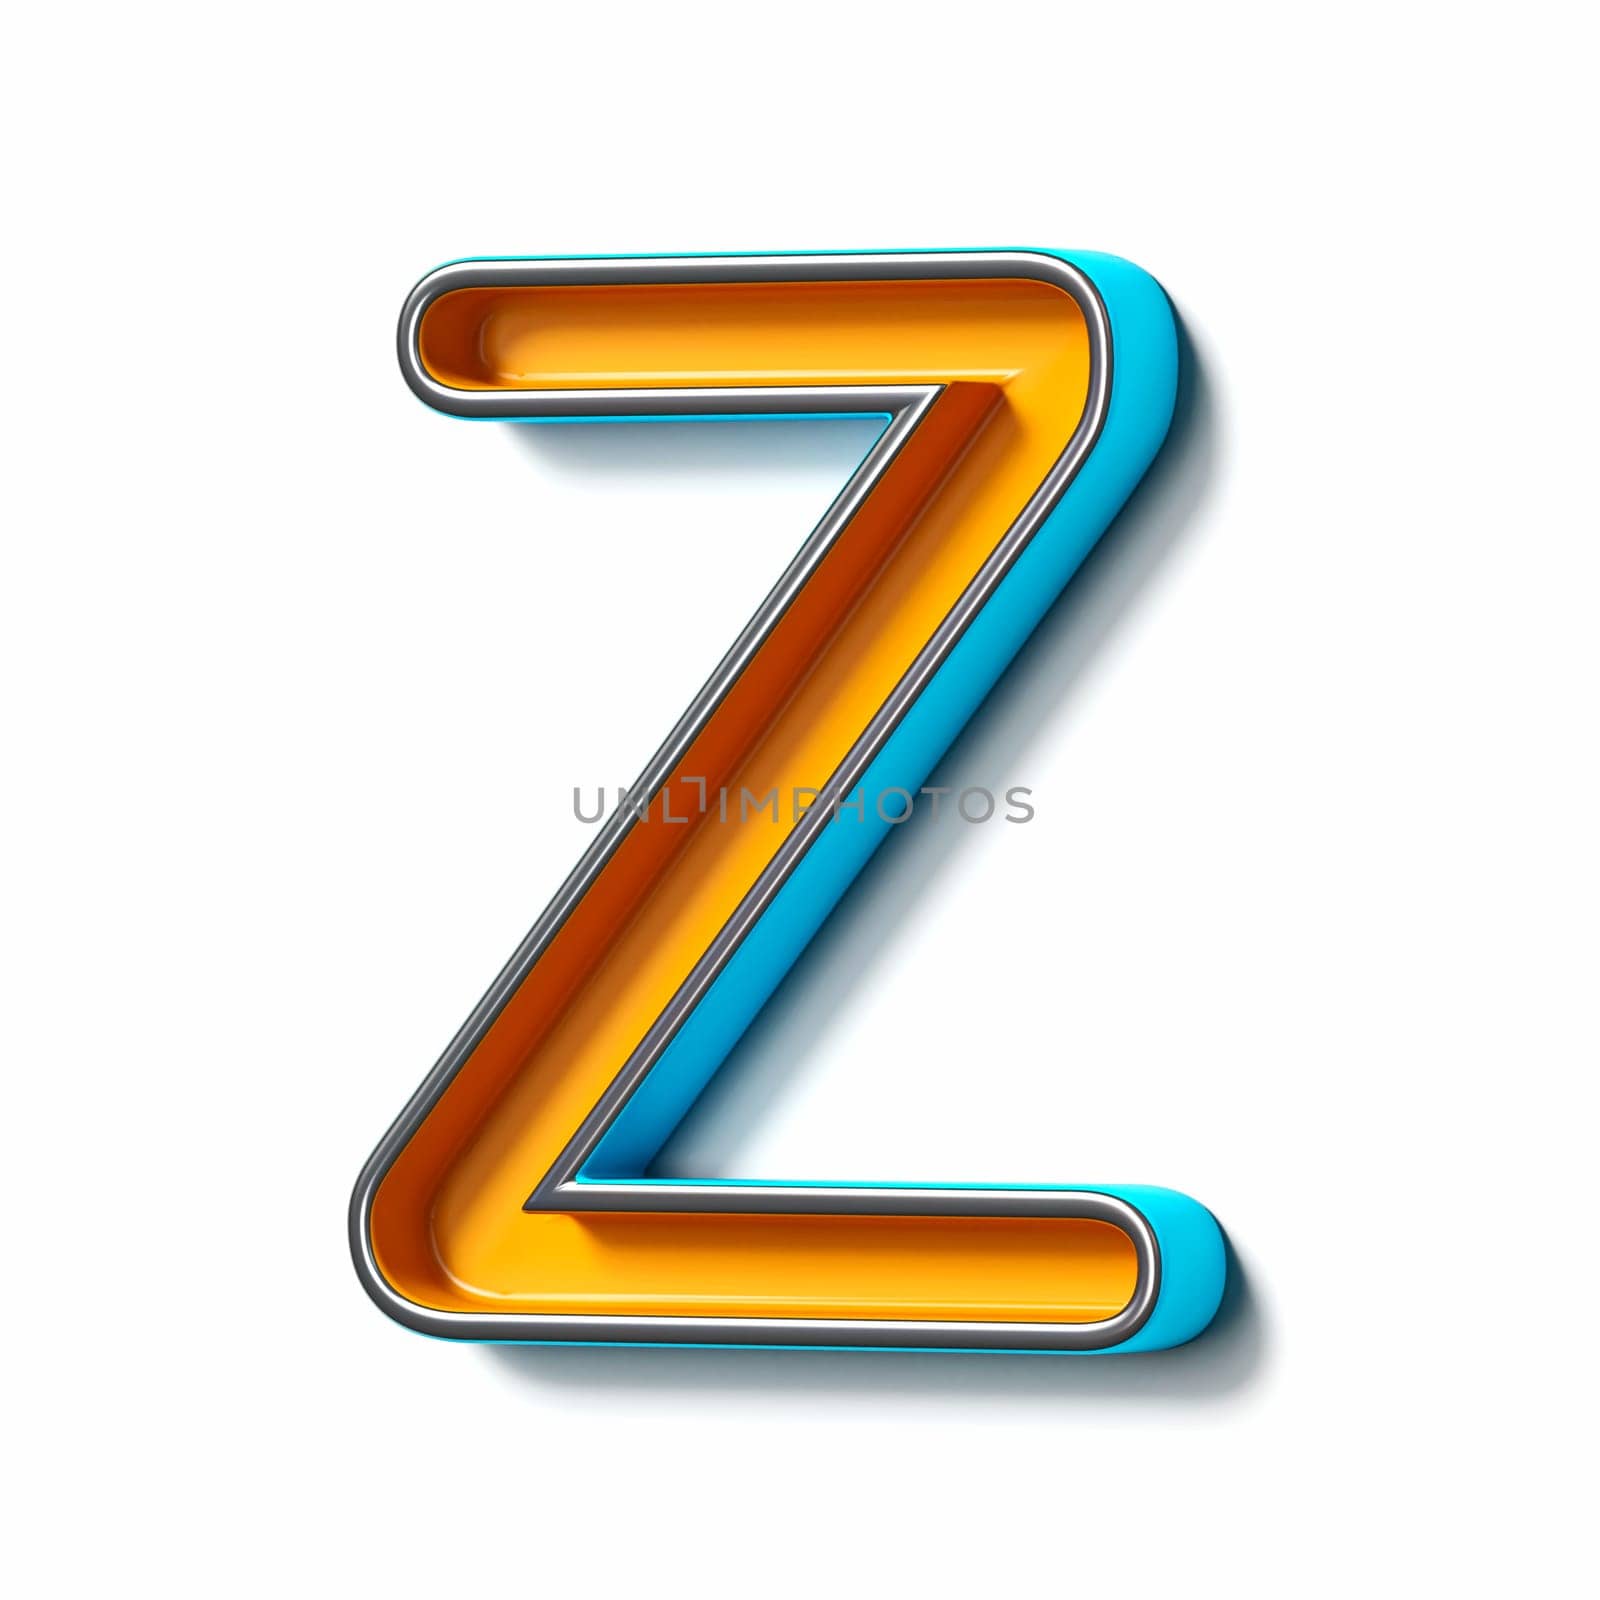 Orange blue thin metal font Letter Z 3D rendering illustration isolated on white background